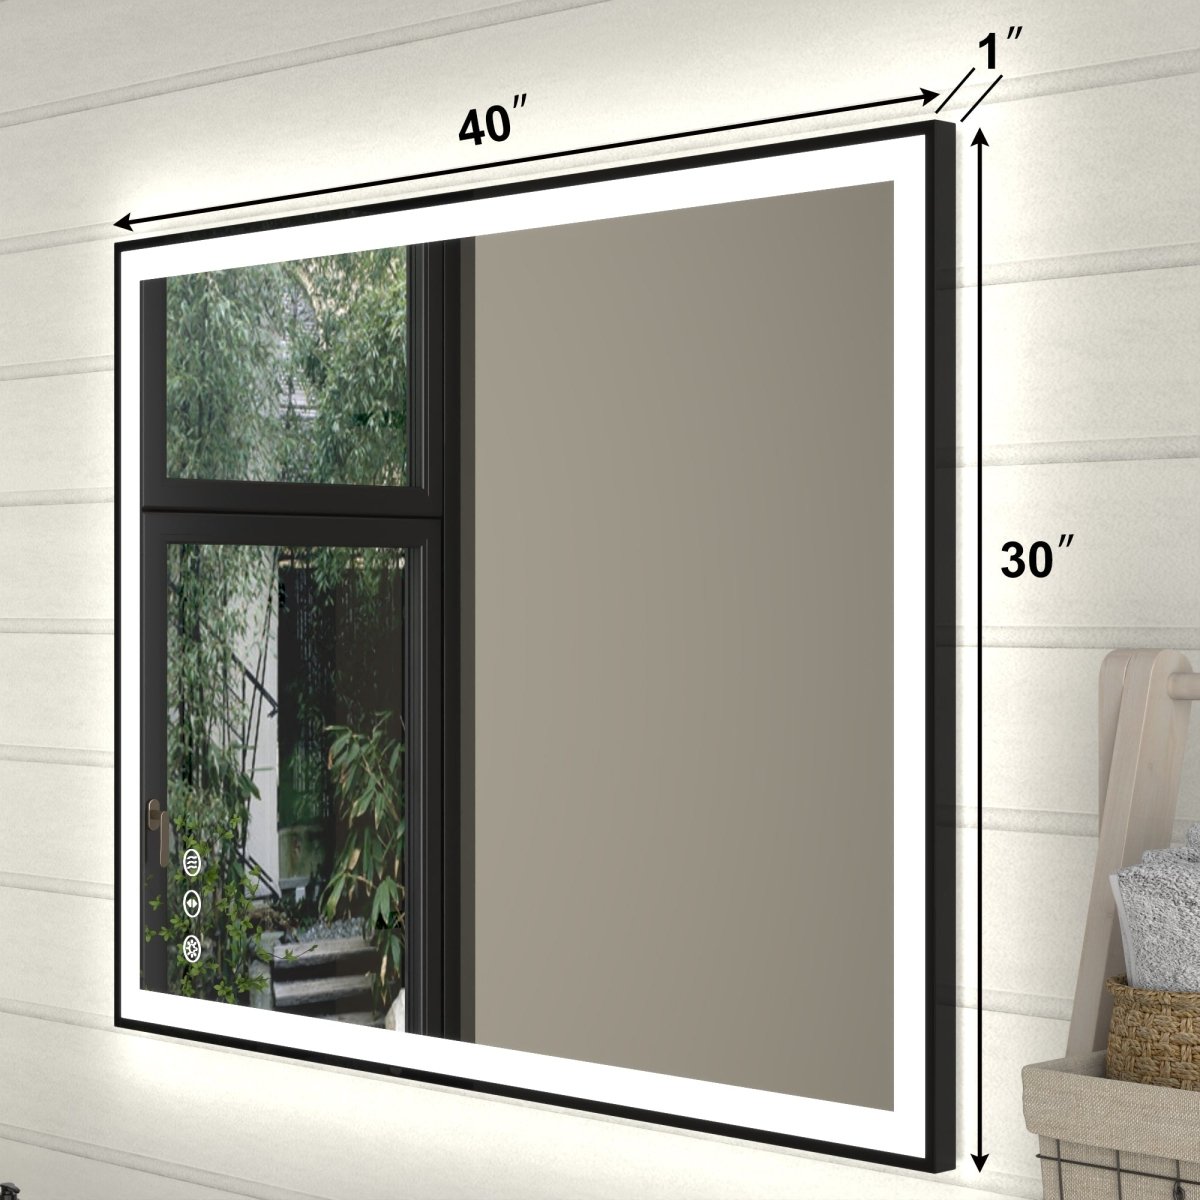 Apex - Noir 40"x30" Framed LED Lighted Bathroom Mirror